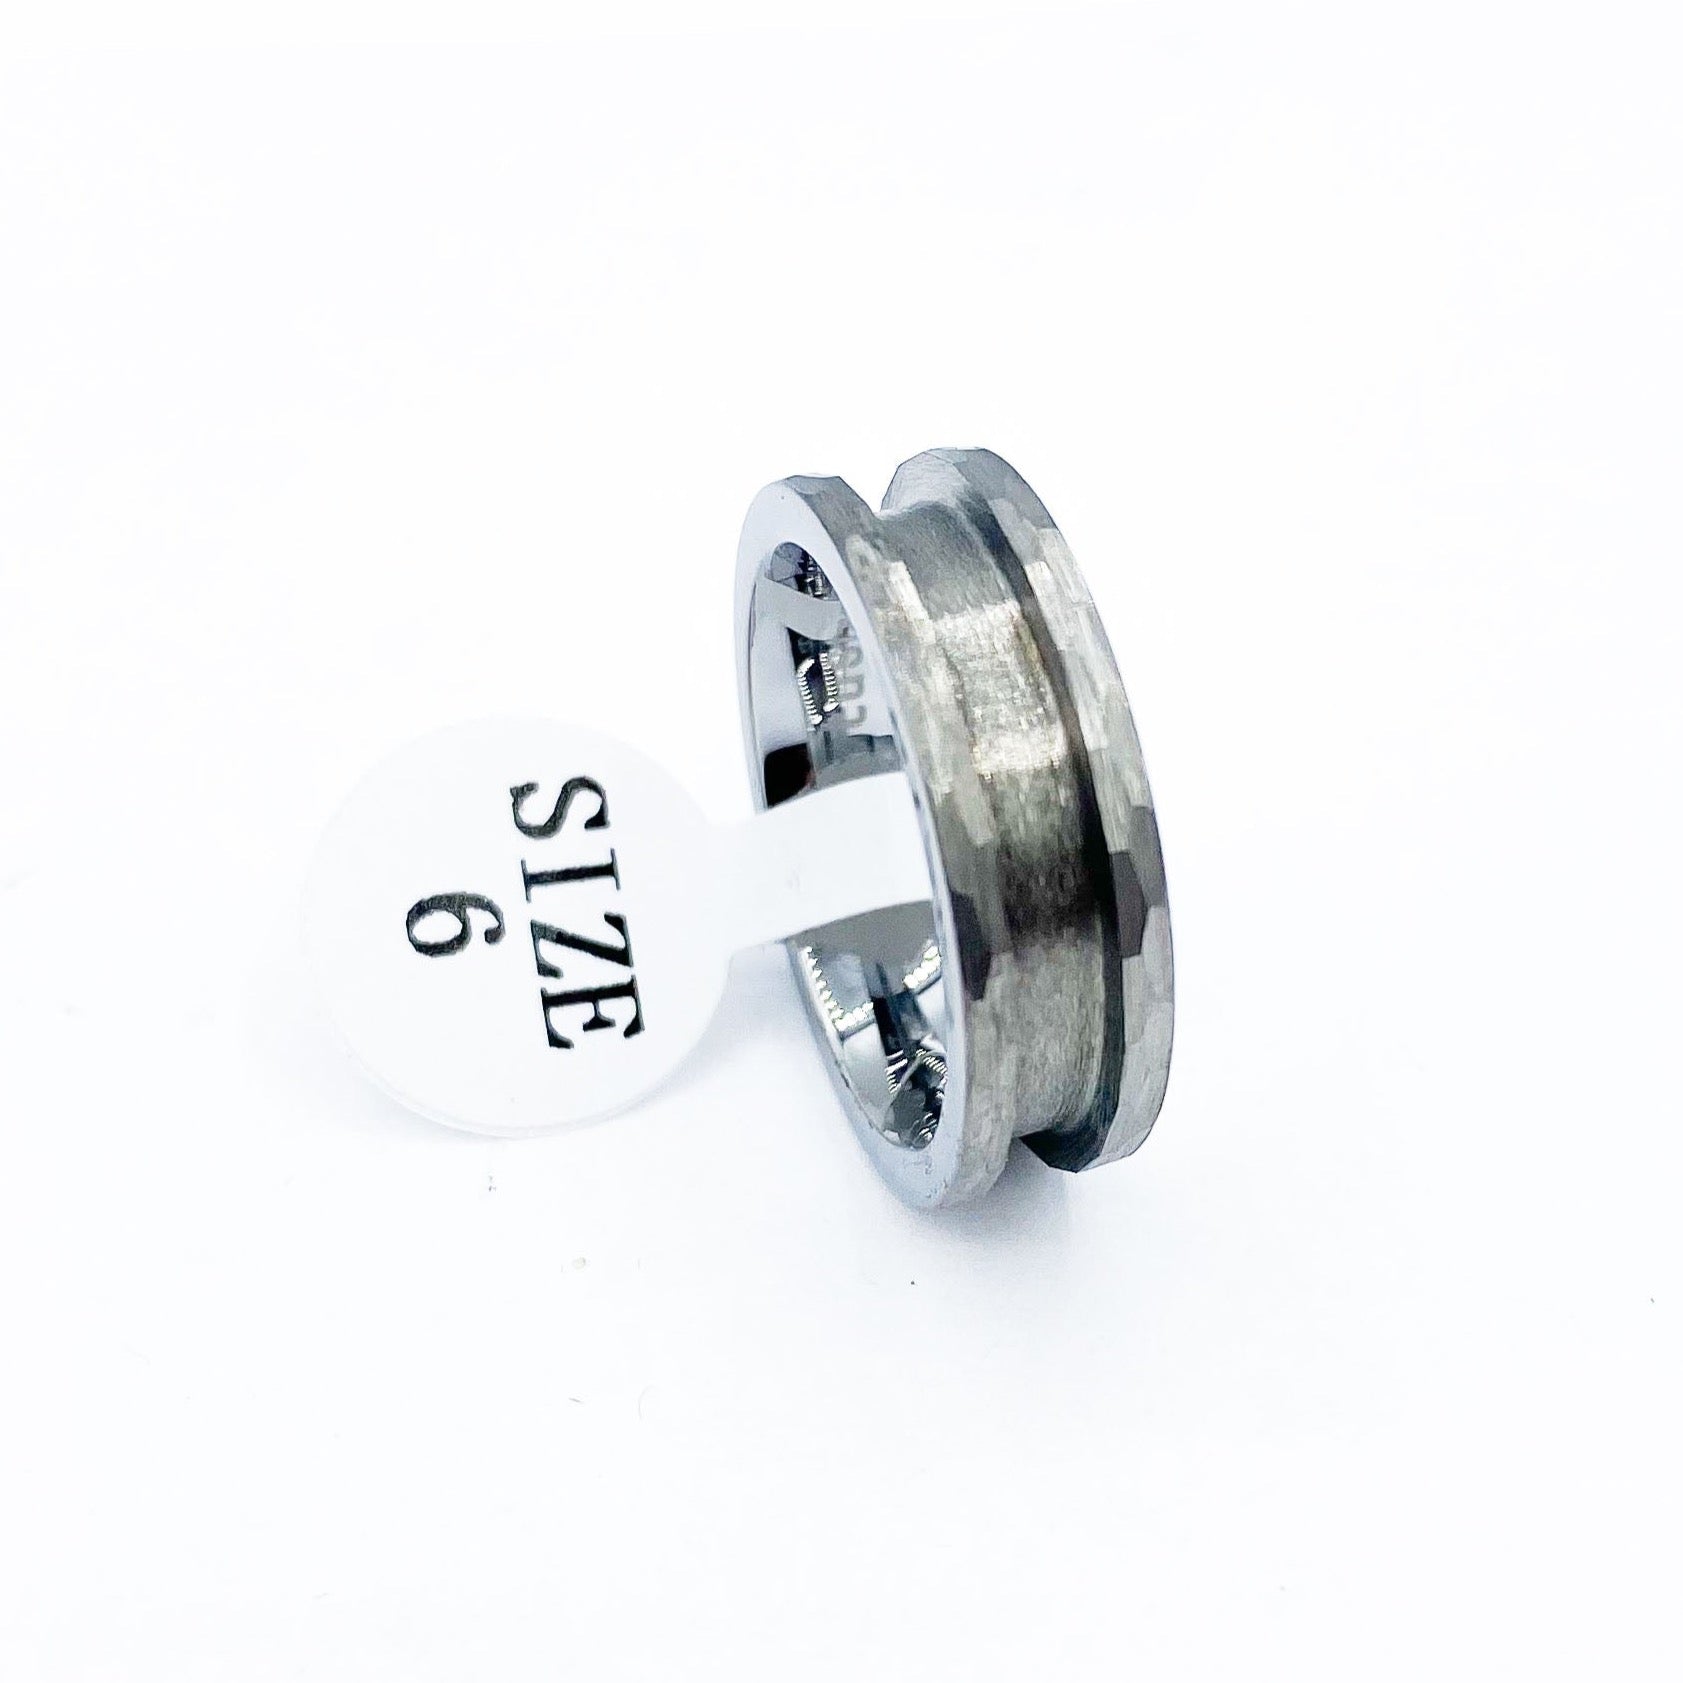 5 Pack - Hammered Tungsten Ring Blank - Patrick Adair Supplies